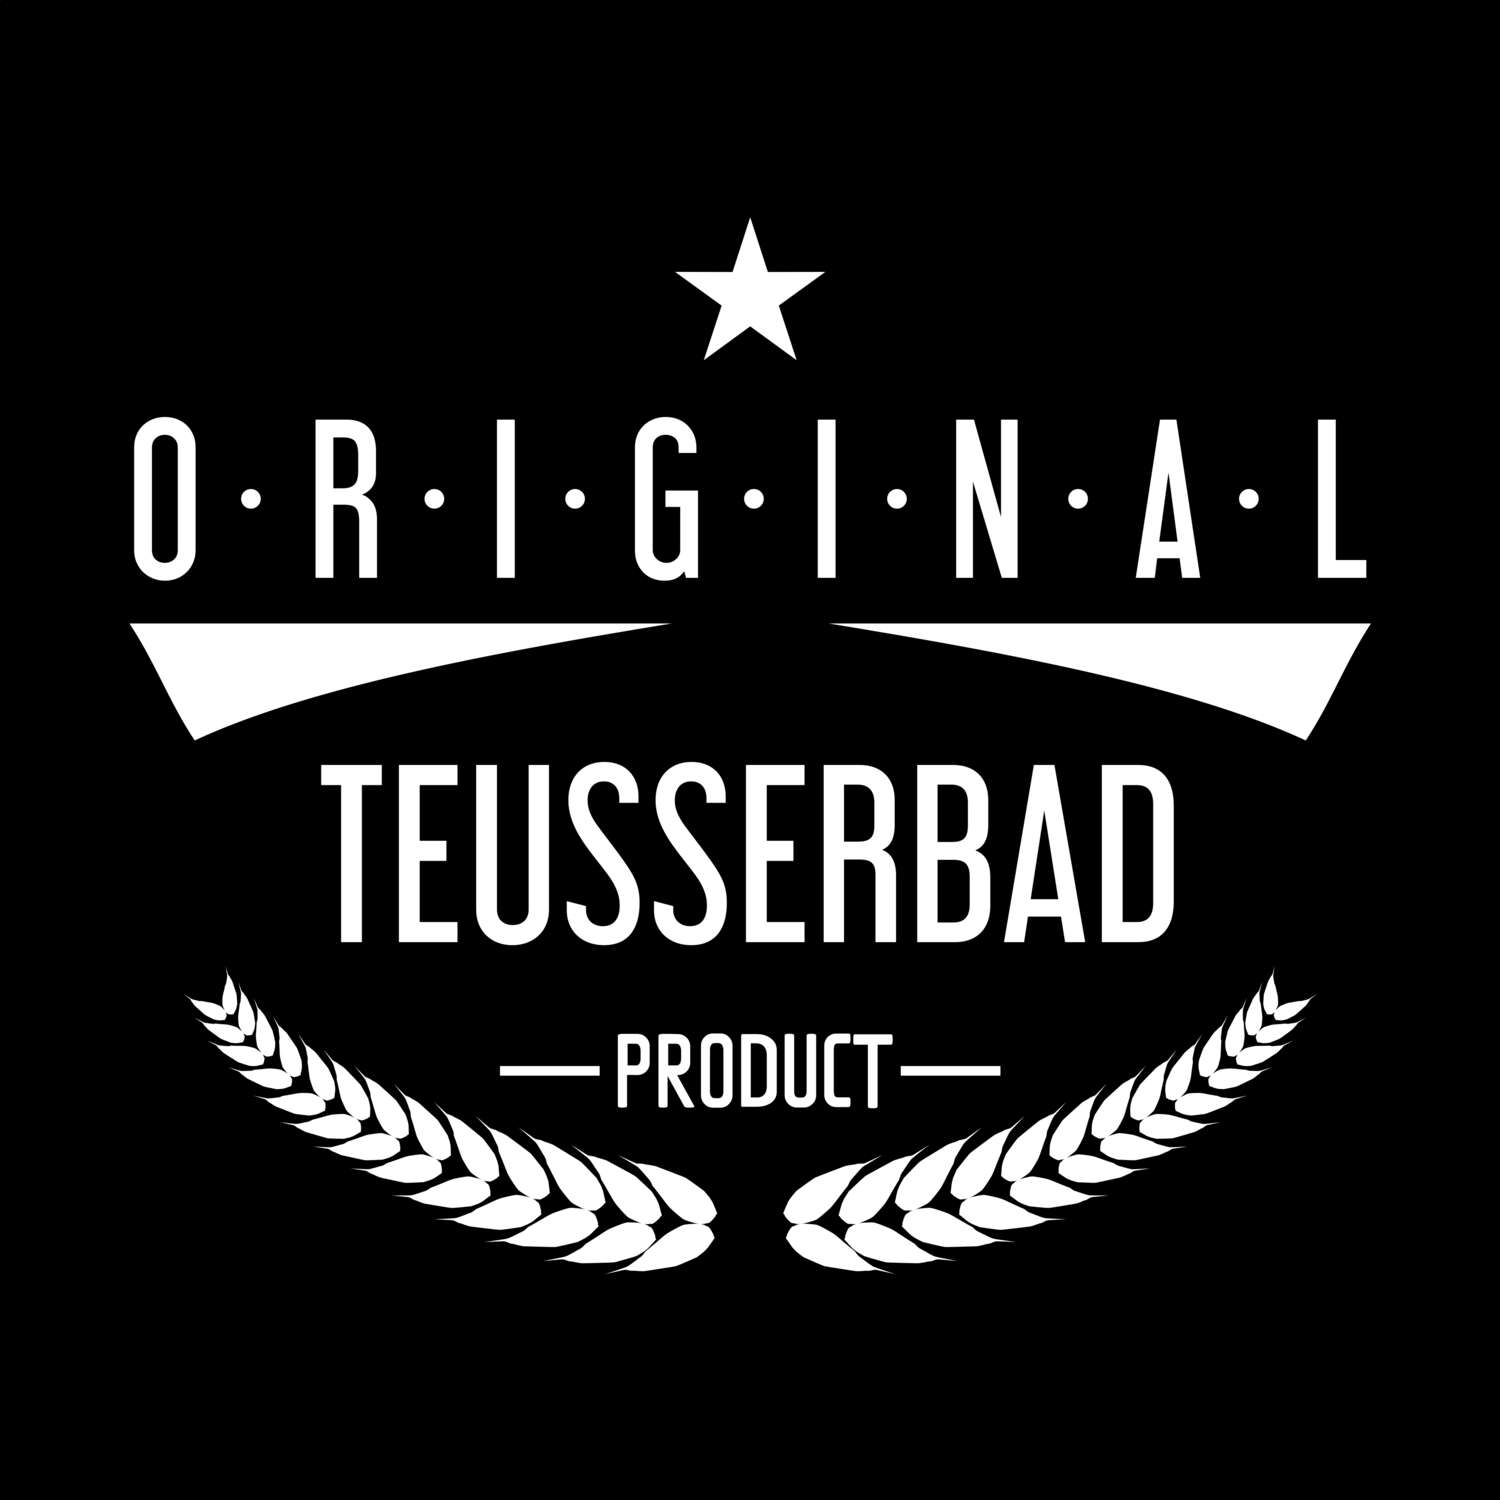 Teusserbad T-Shirt »Original Product«